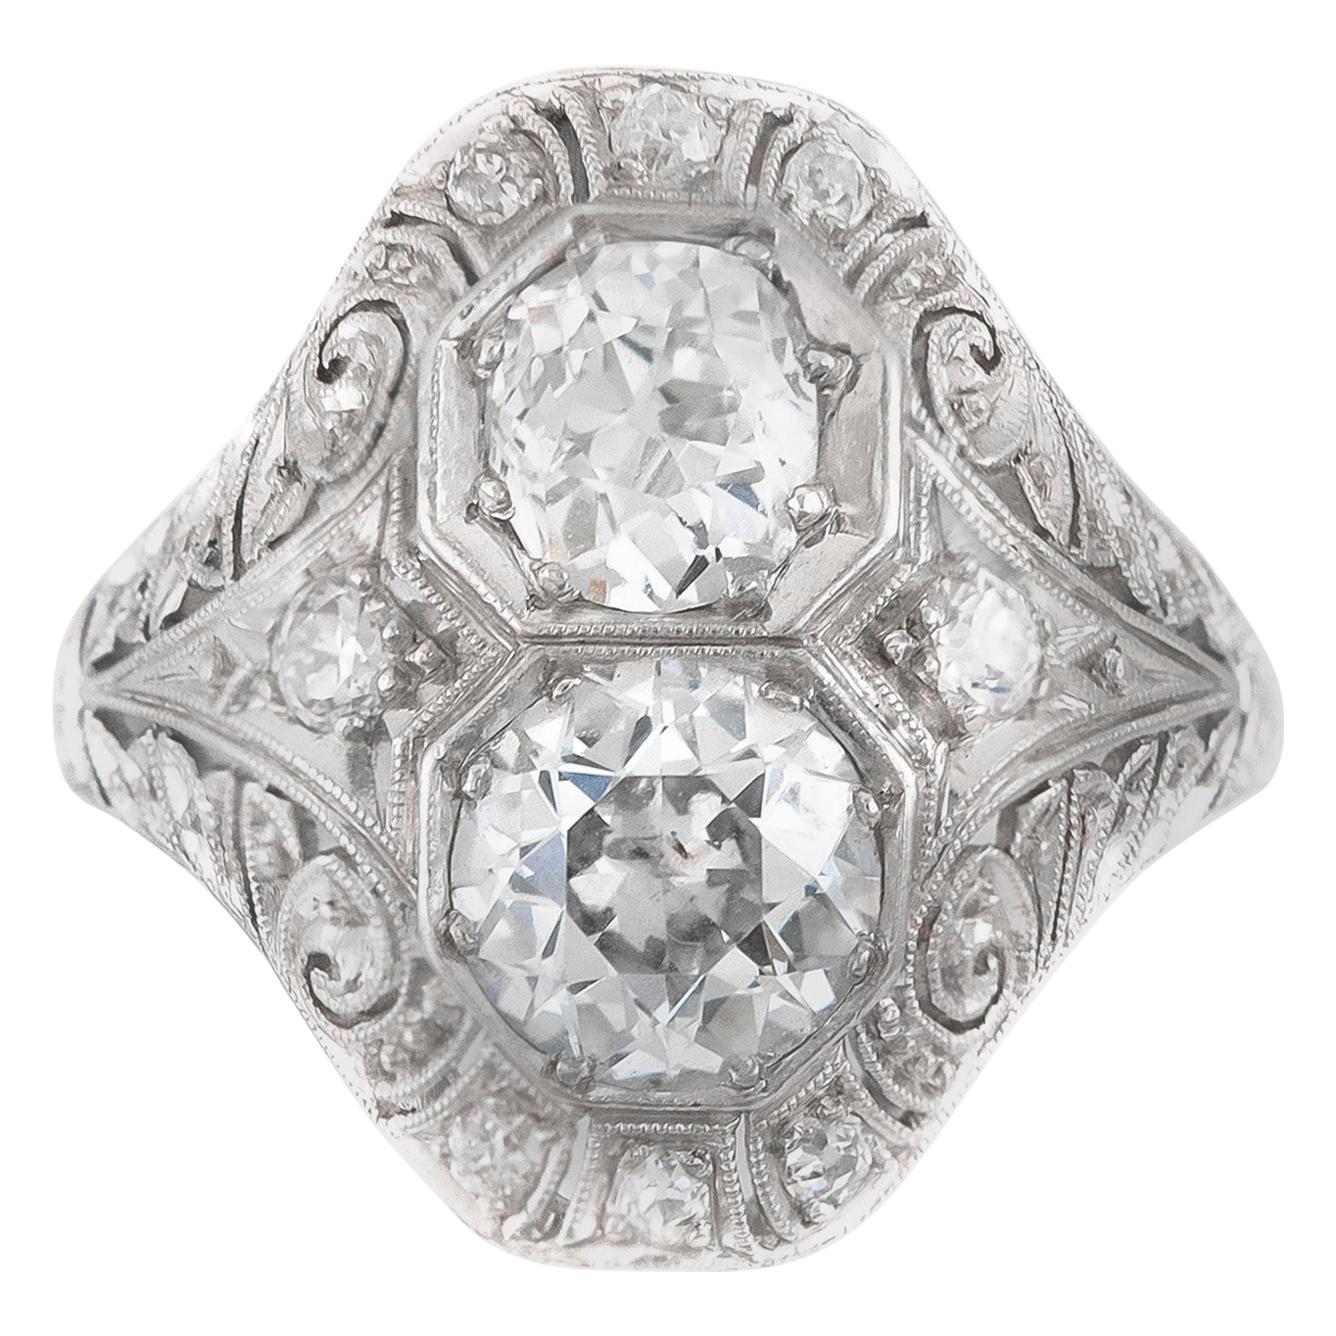 1930s Filigree with Diamonds Ring